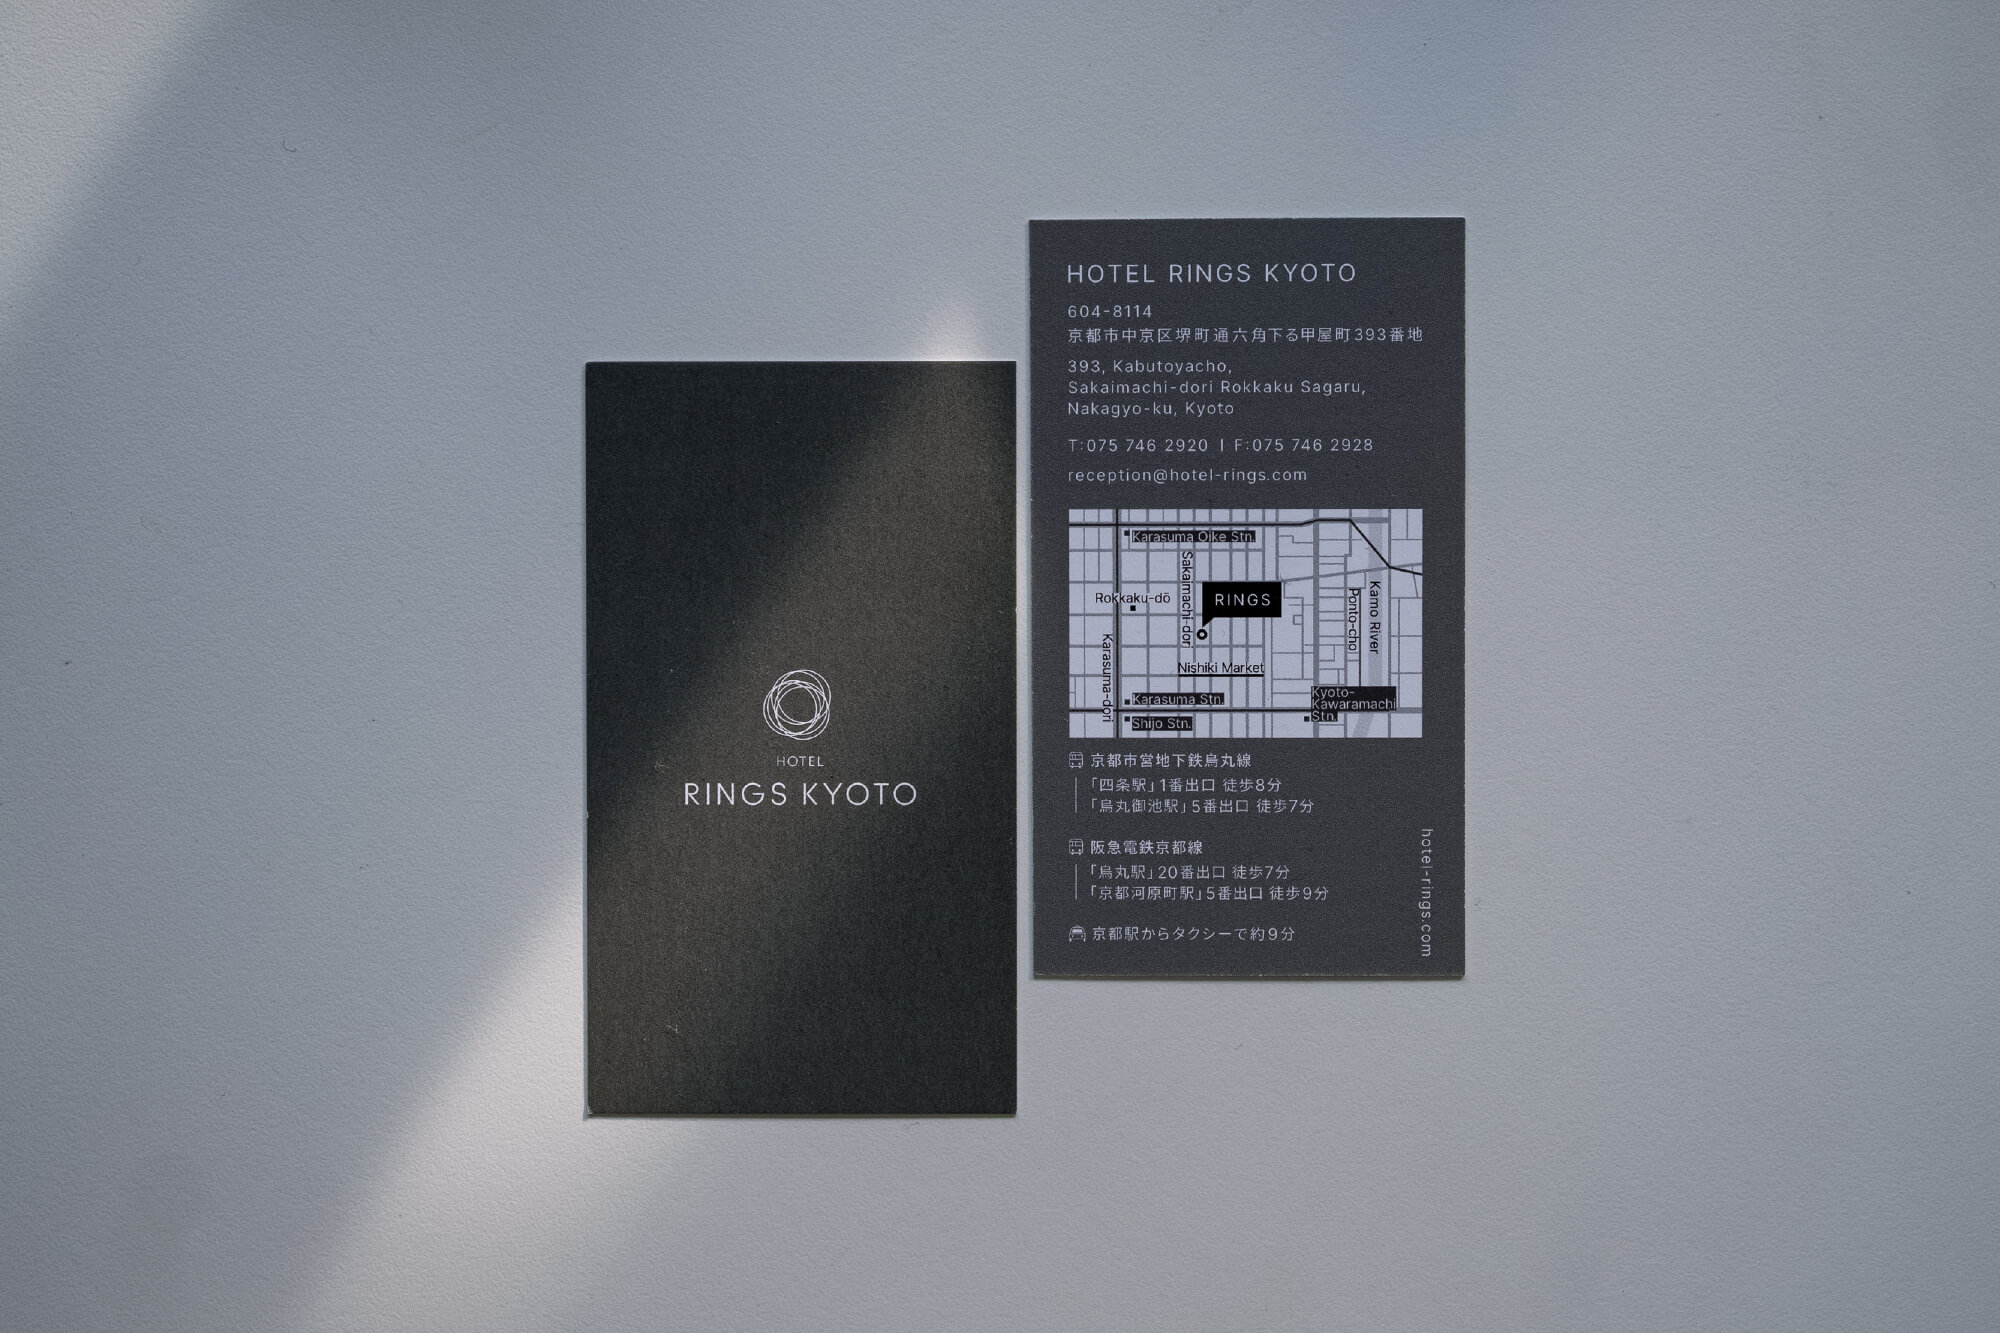 HOTEL RINGS KYOTO card